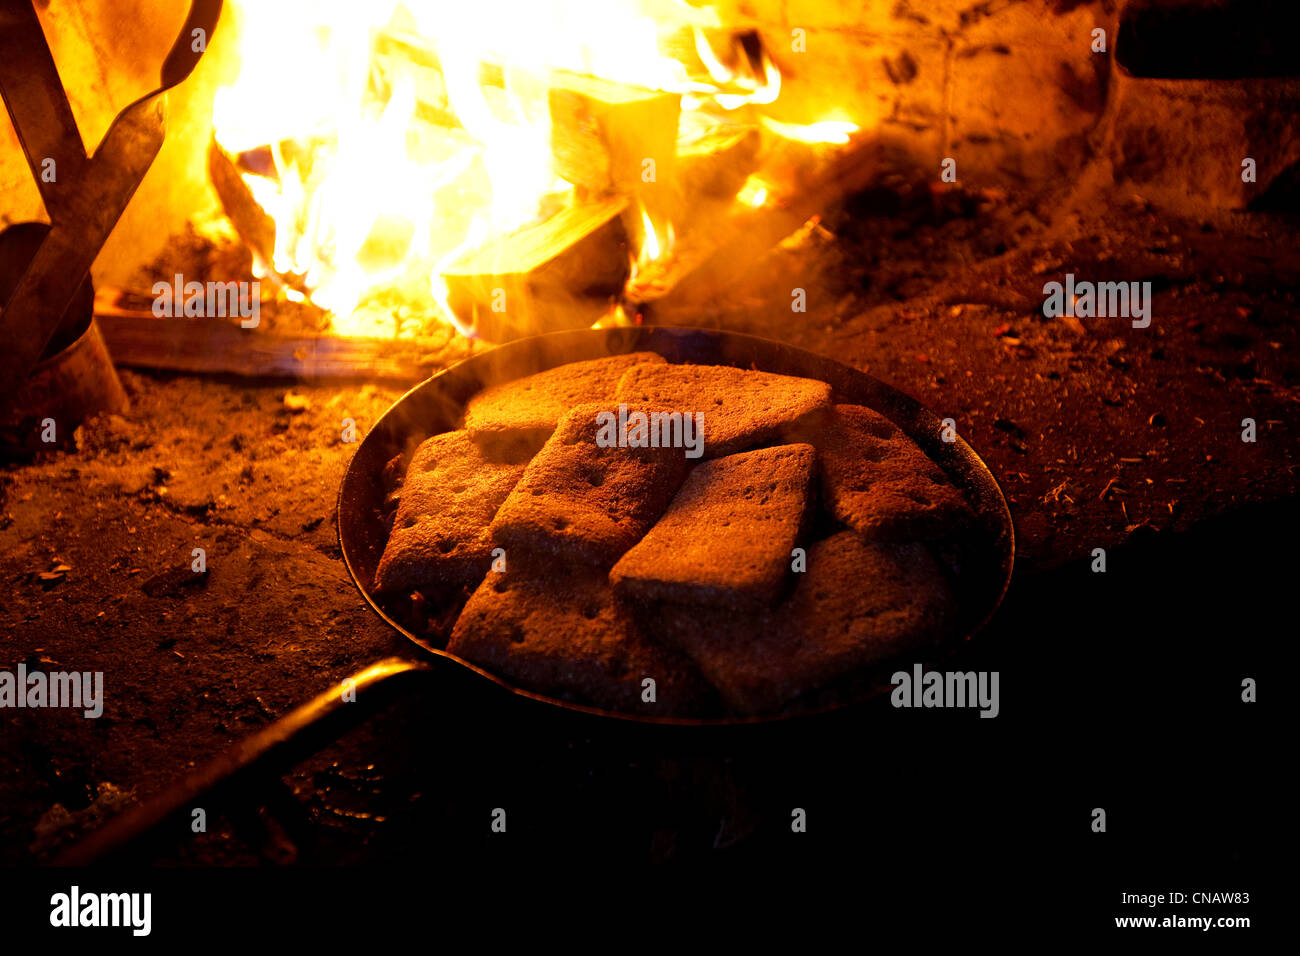 Finland, Lapland province, Urho Kekkonen National Park, Saariselka, reindeer with bread, cooking on wood fire Stock Photo